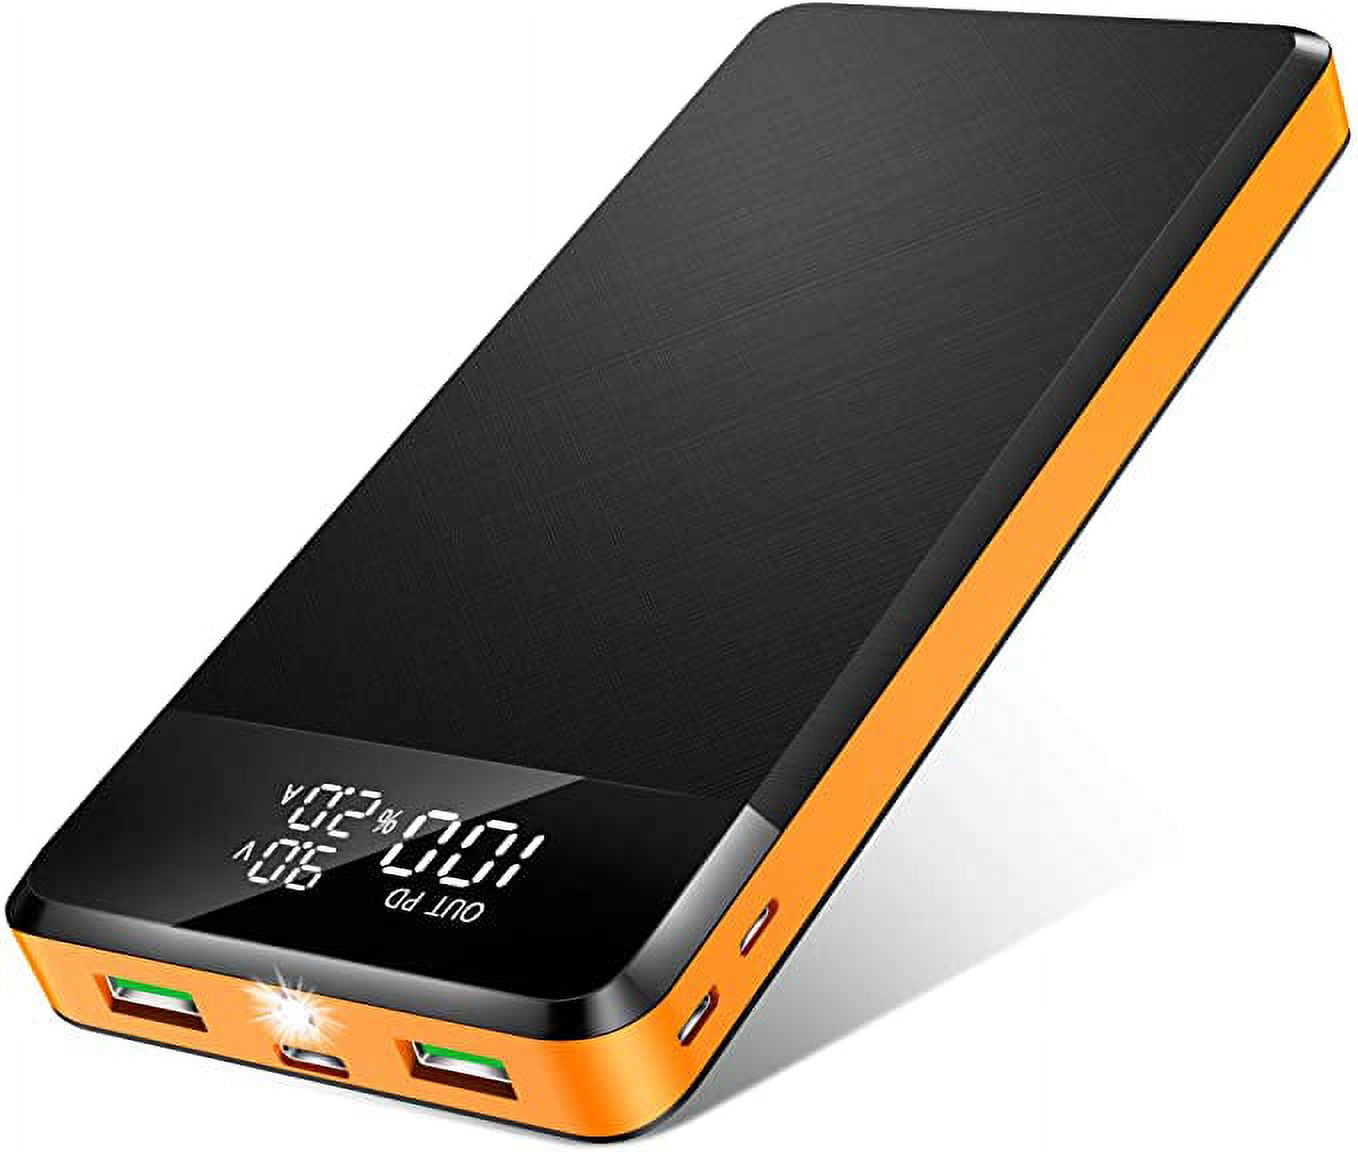 Power Bank 26800mAh, Portable Phone Charger w/LED Display 3 Inputs